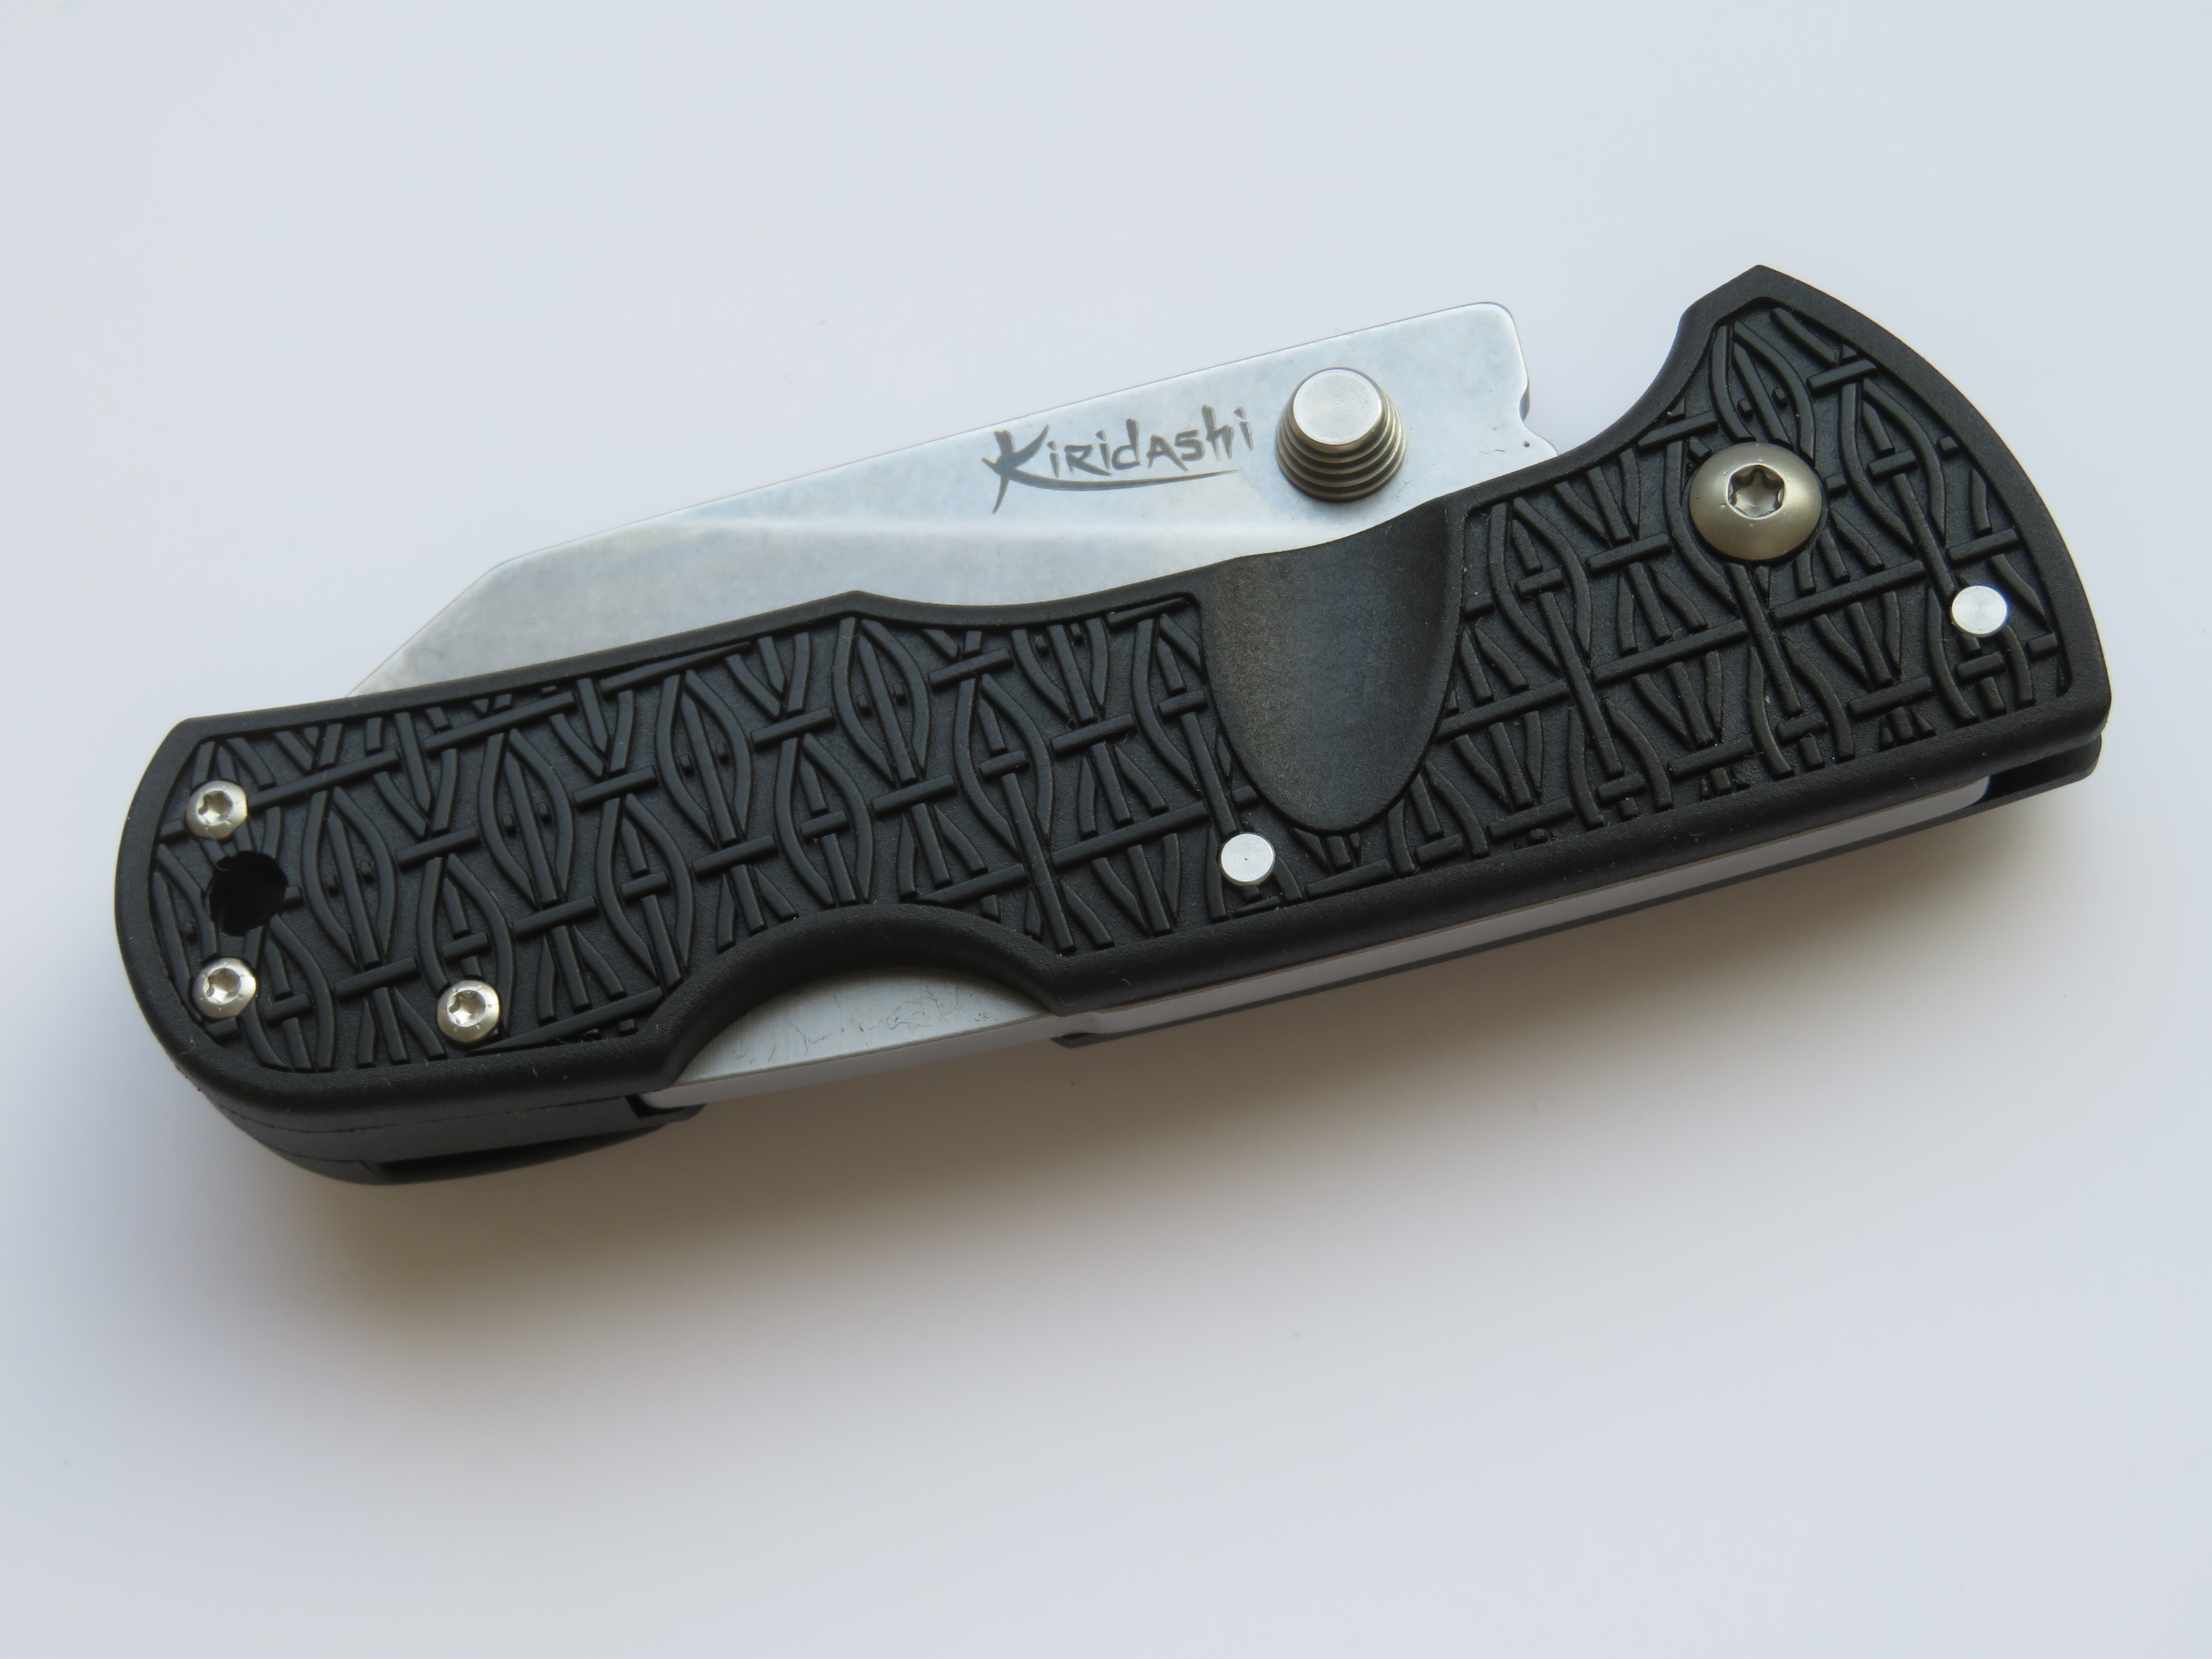 Rukojeť nože Coild Steel Kiridashi je vyrobena z materiálu Griv-Ex s velice zajímavým designem.